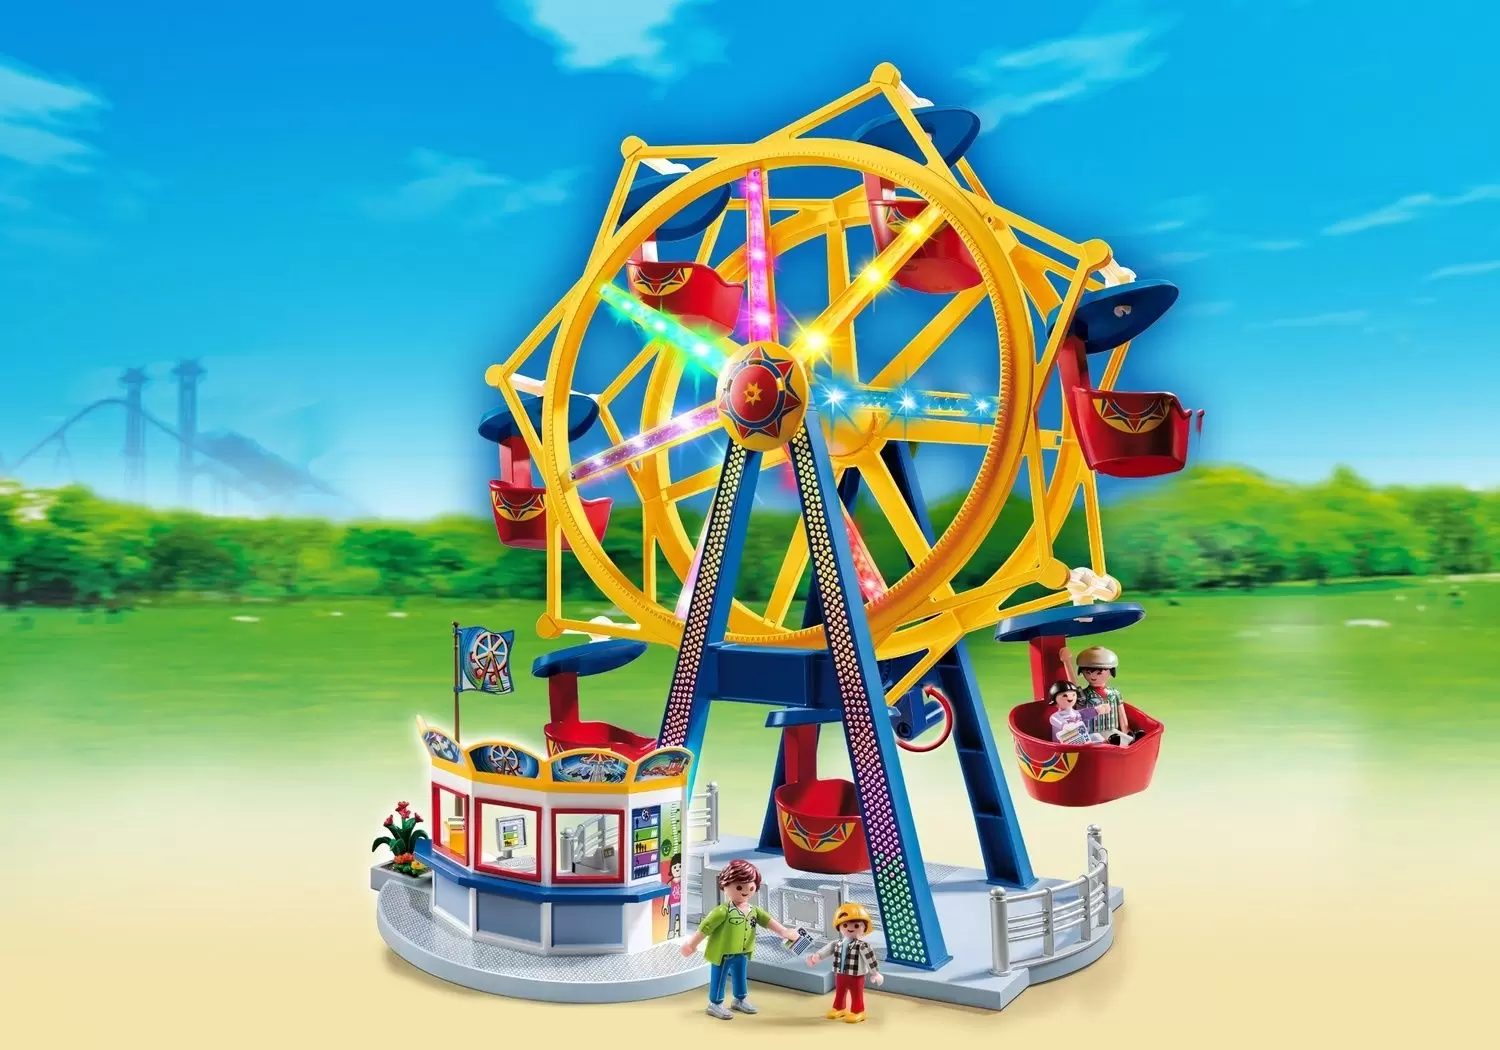 Playmobil on Hollidays - Ferris Wheel with Lights